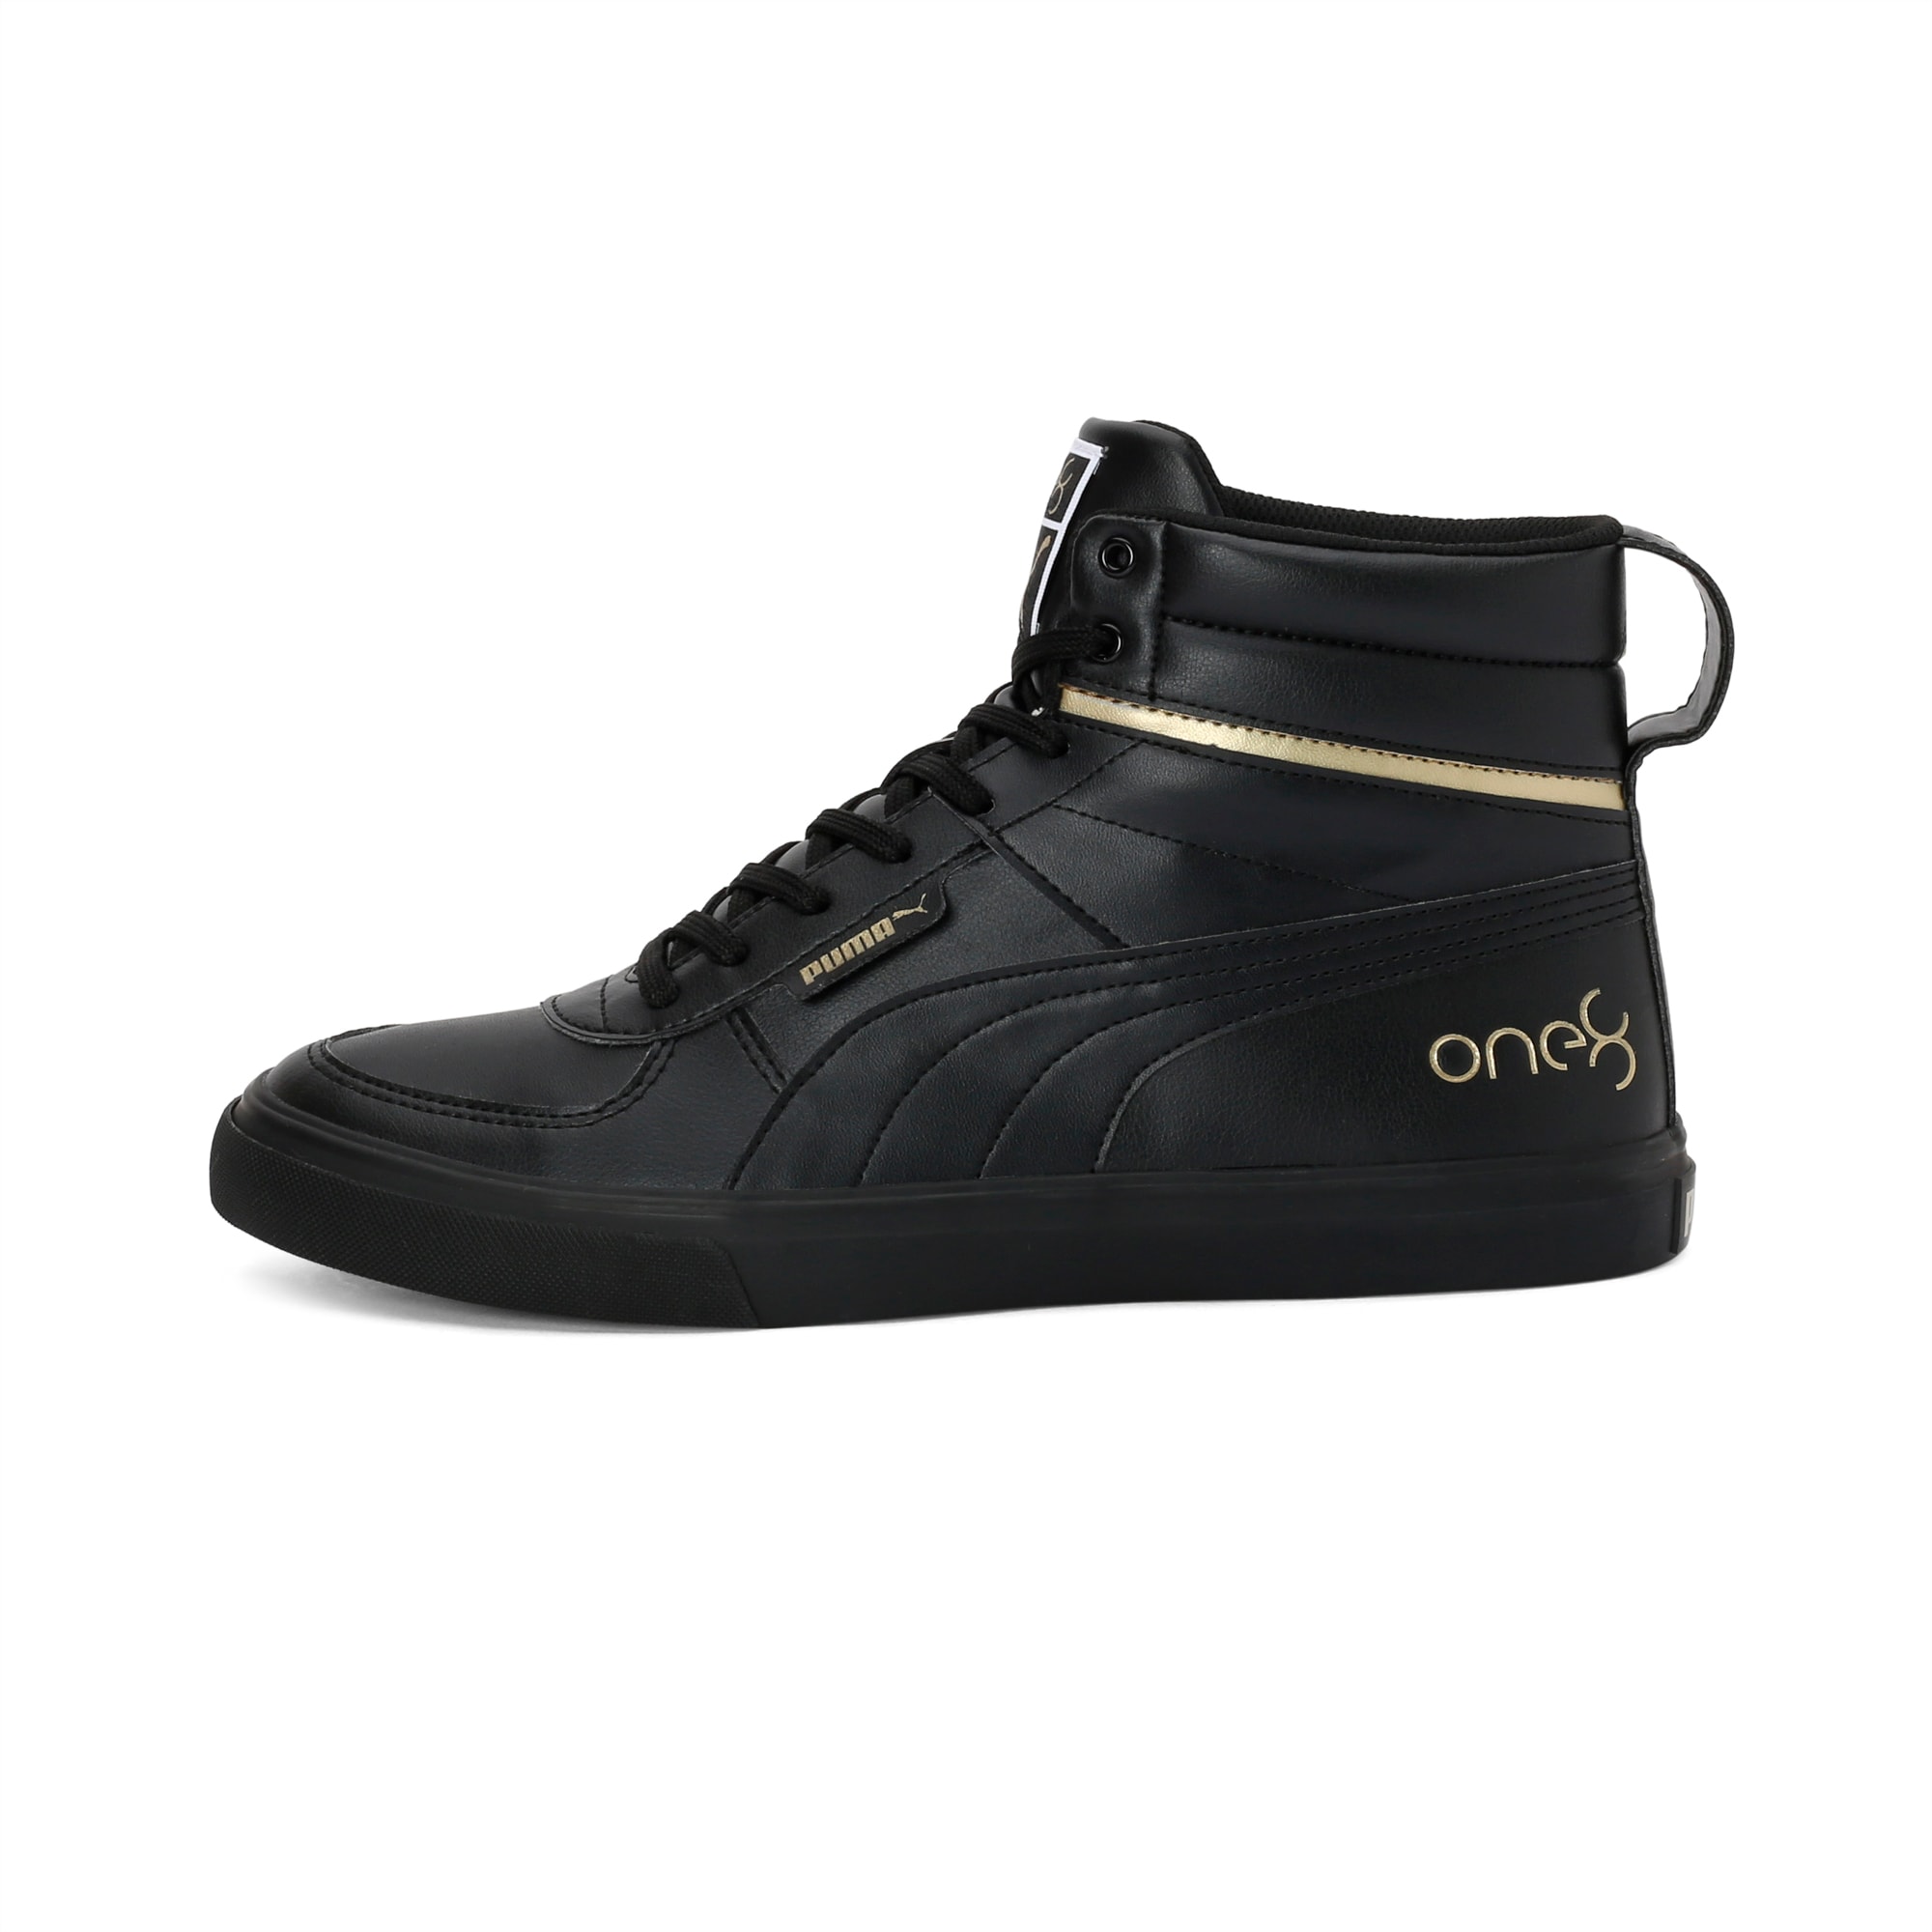 puma one8 black sneakers